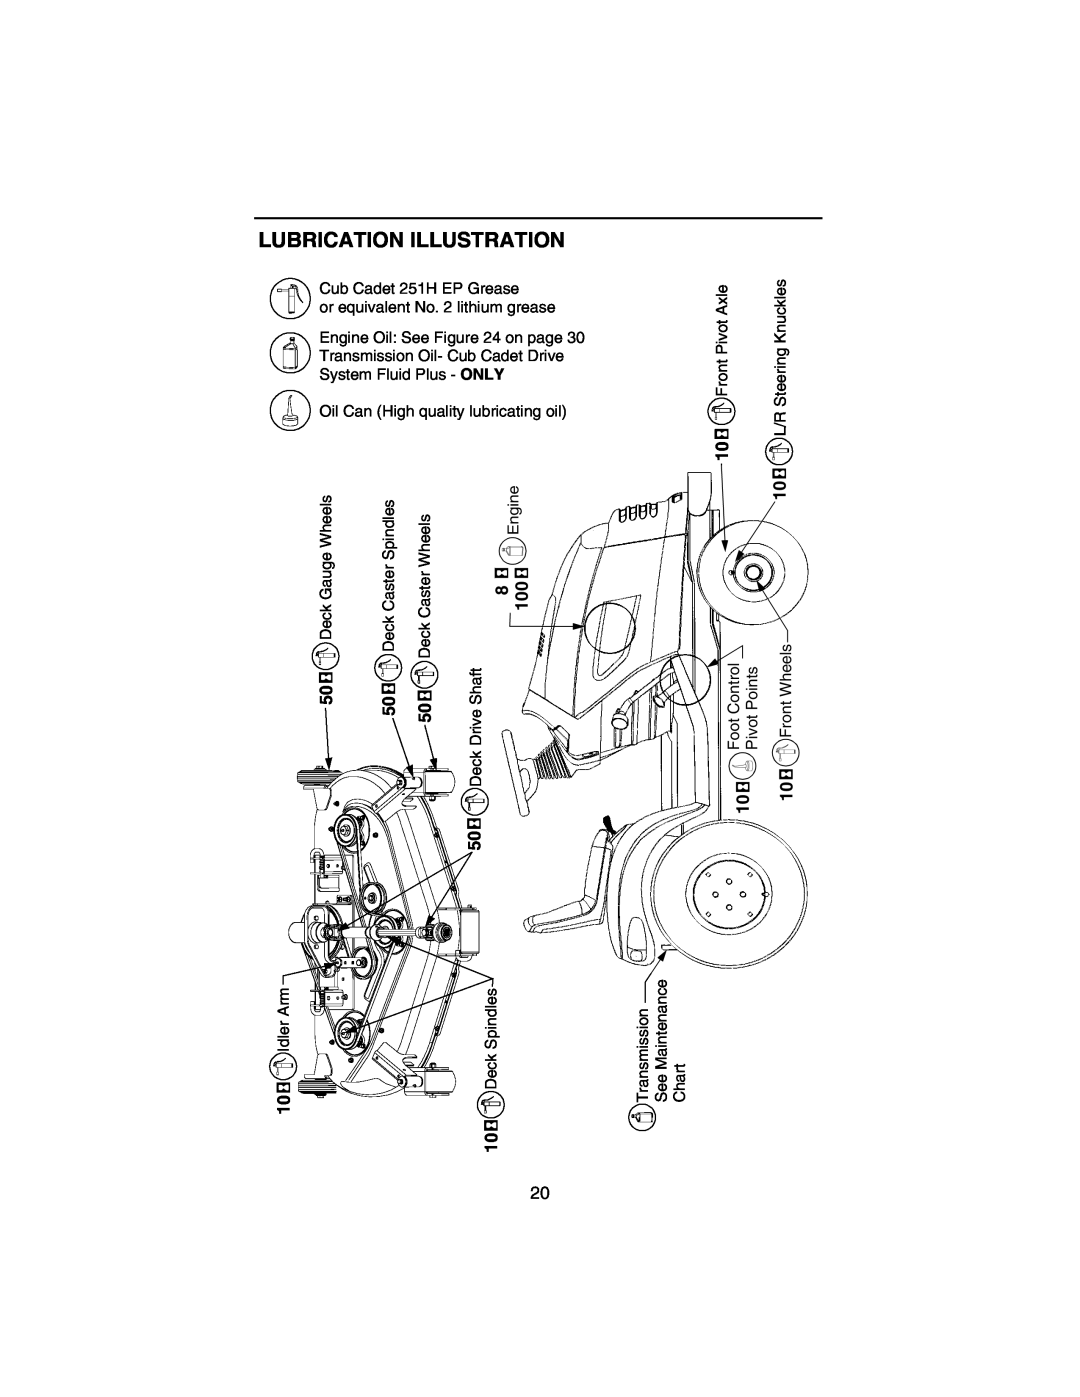 Cub Cadet 3184 manual Lubrication Illustration, Transmission 